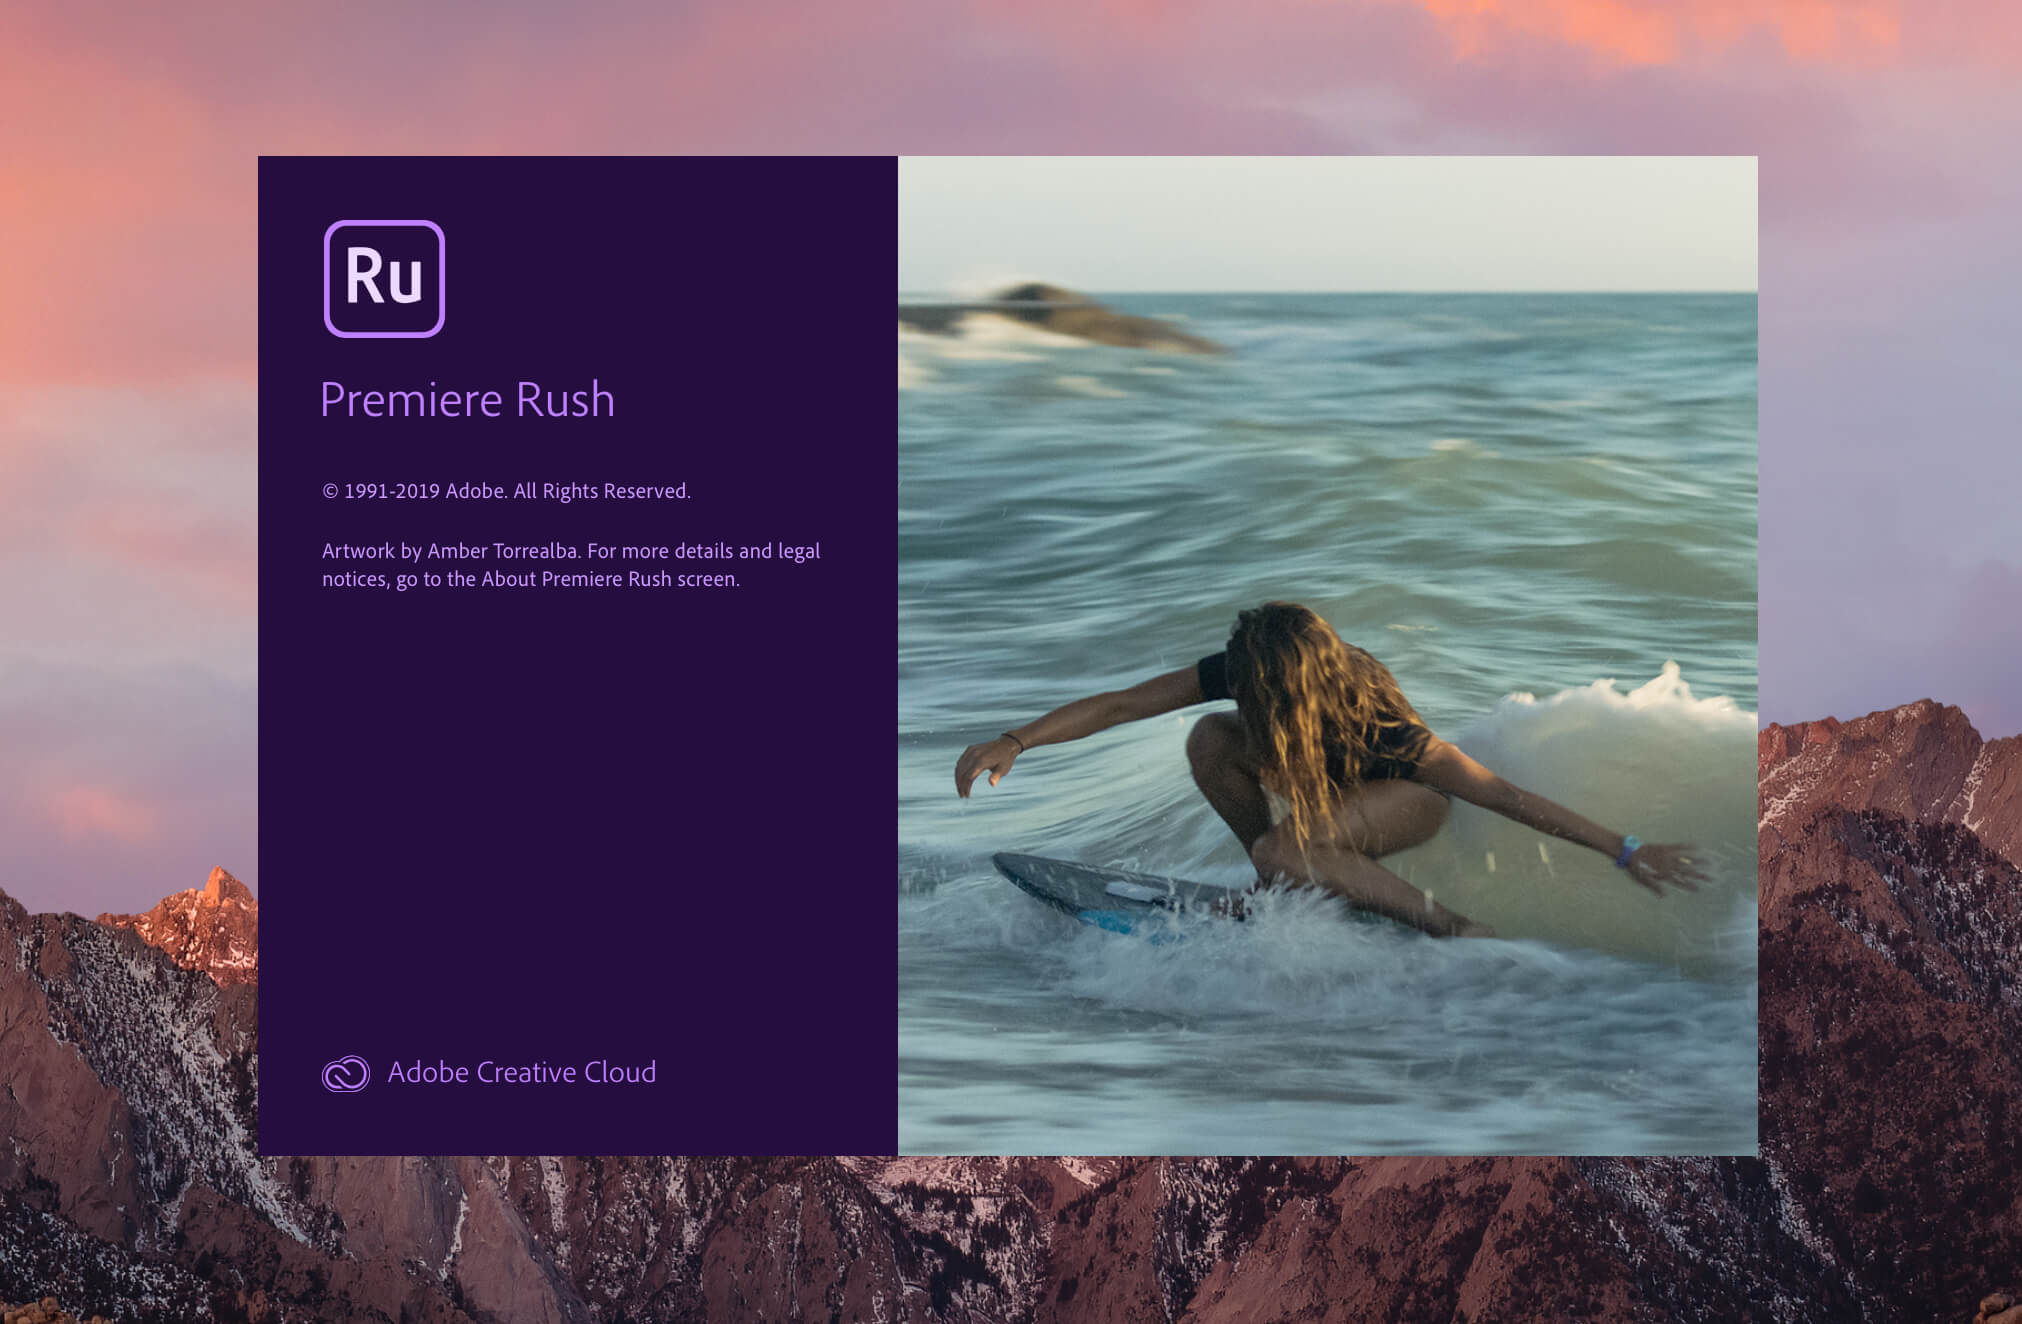 Adobe Premiere Rush CC 1.5.62 视频编辑软件